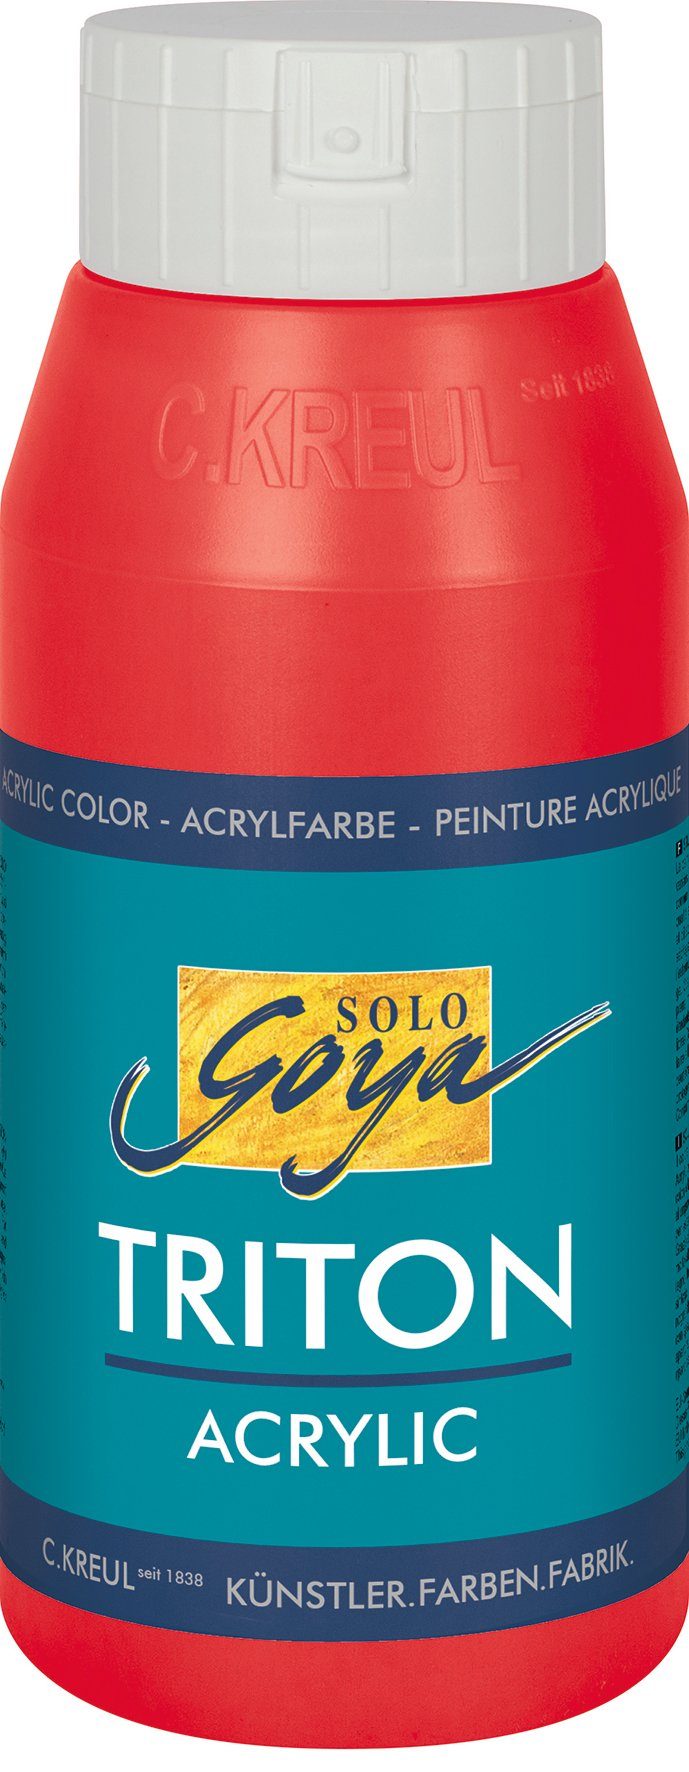 Acrylfarbe Kreul Goya ml 750 Solo Triton Acrylic, Kirschrot